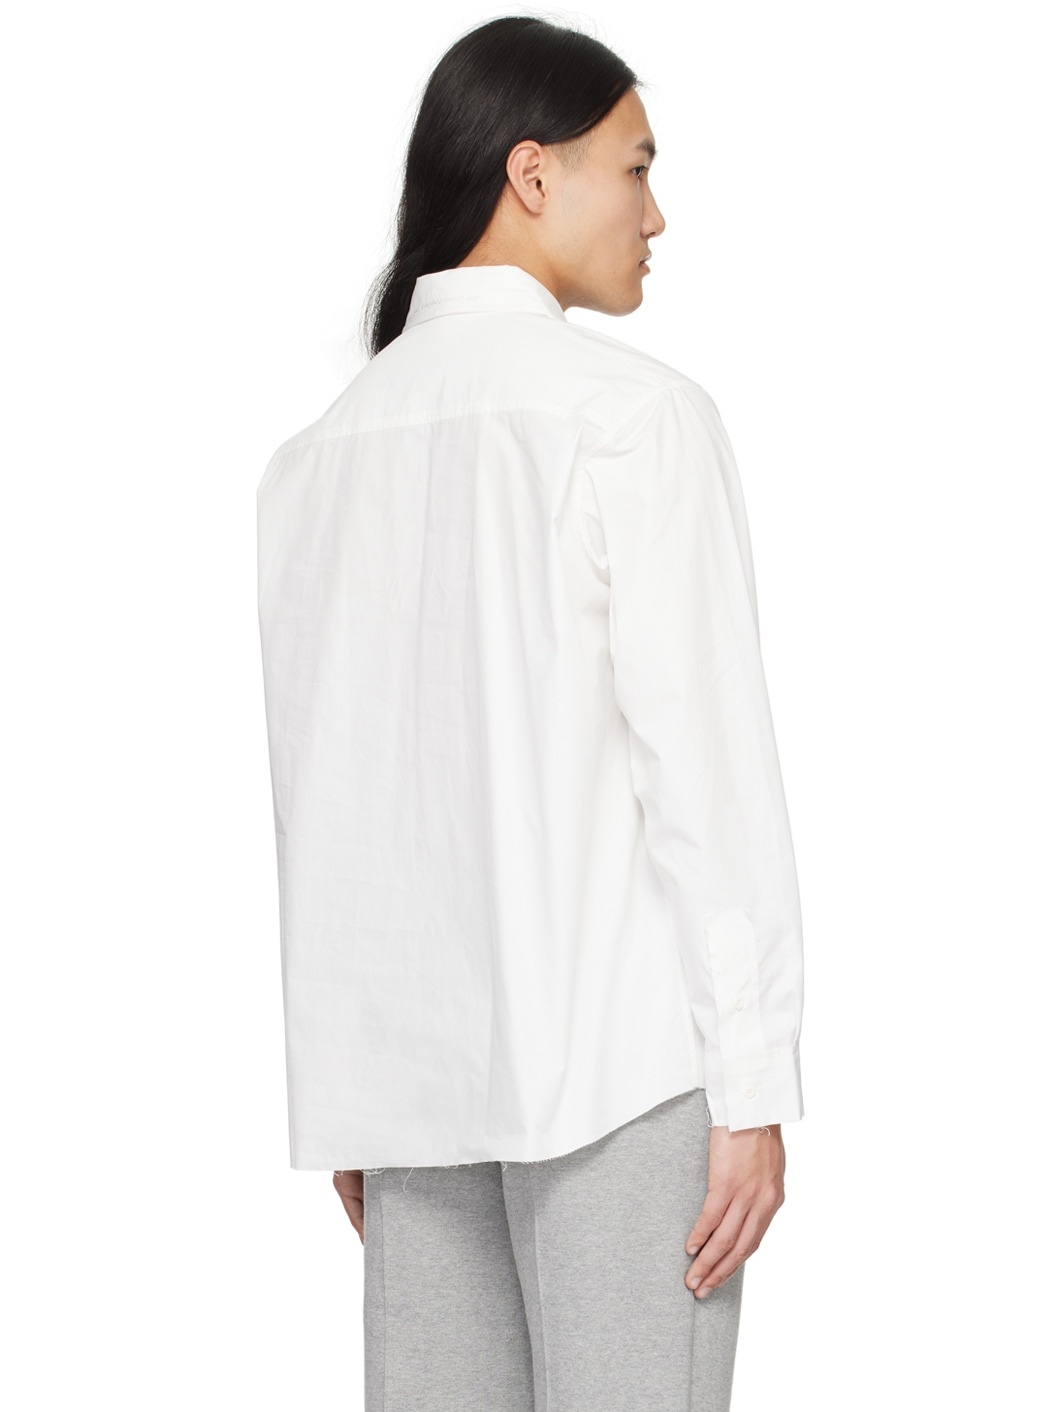 White Staff Uniform Shirt - 3